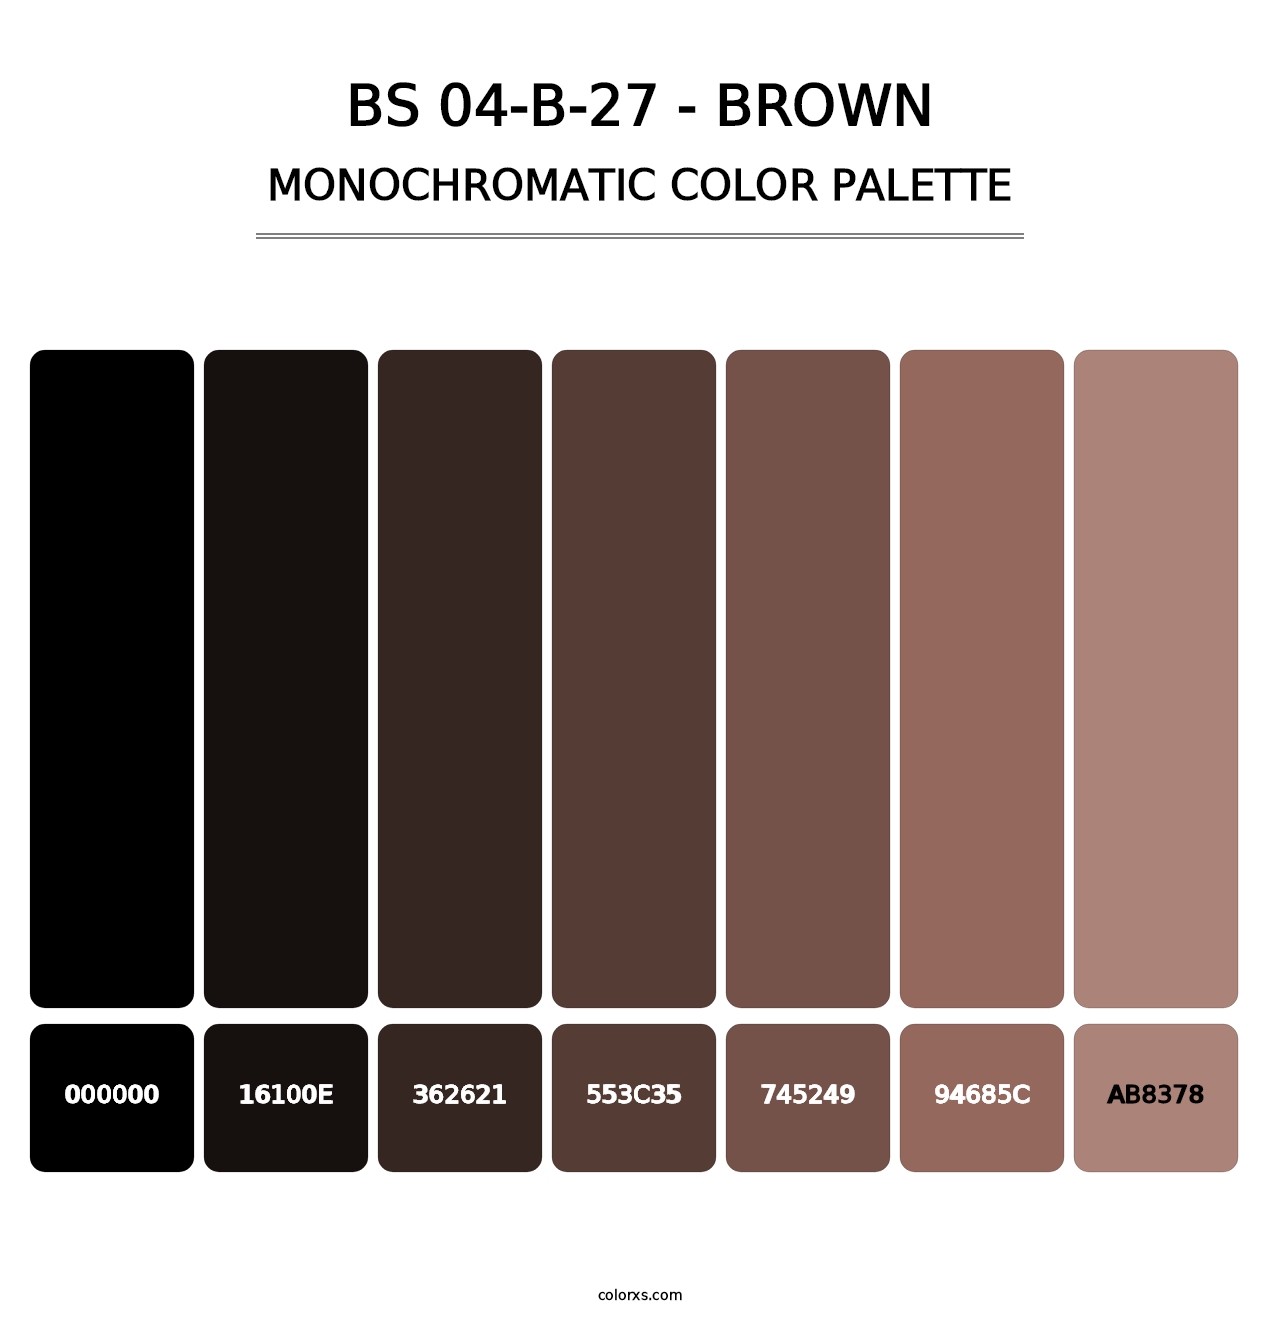 BS 04-B-27 - Brown - Monochromatic Color Palette